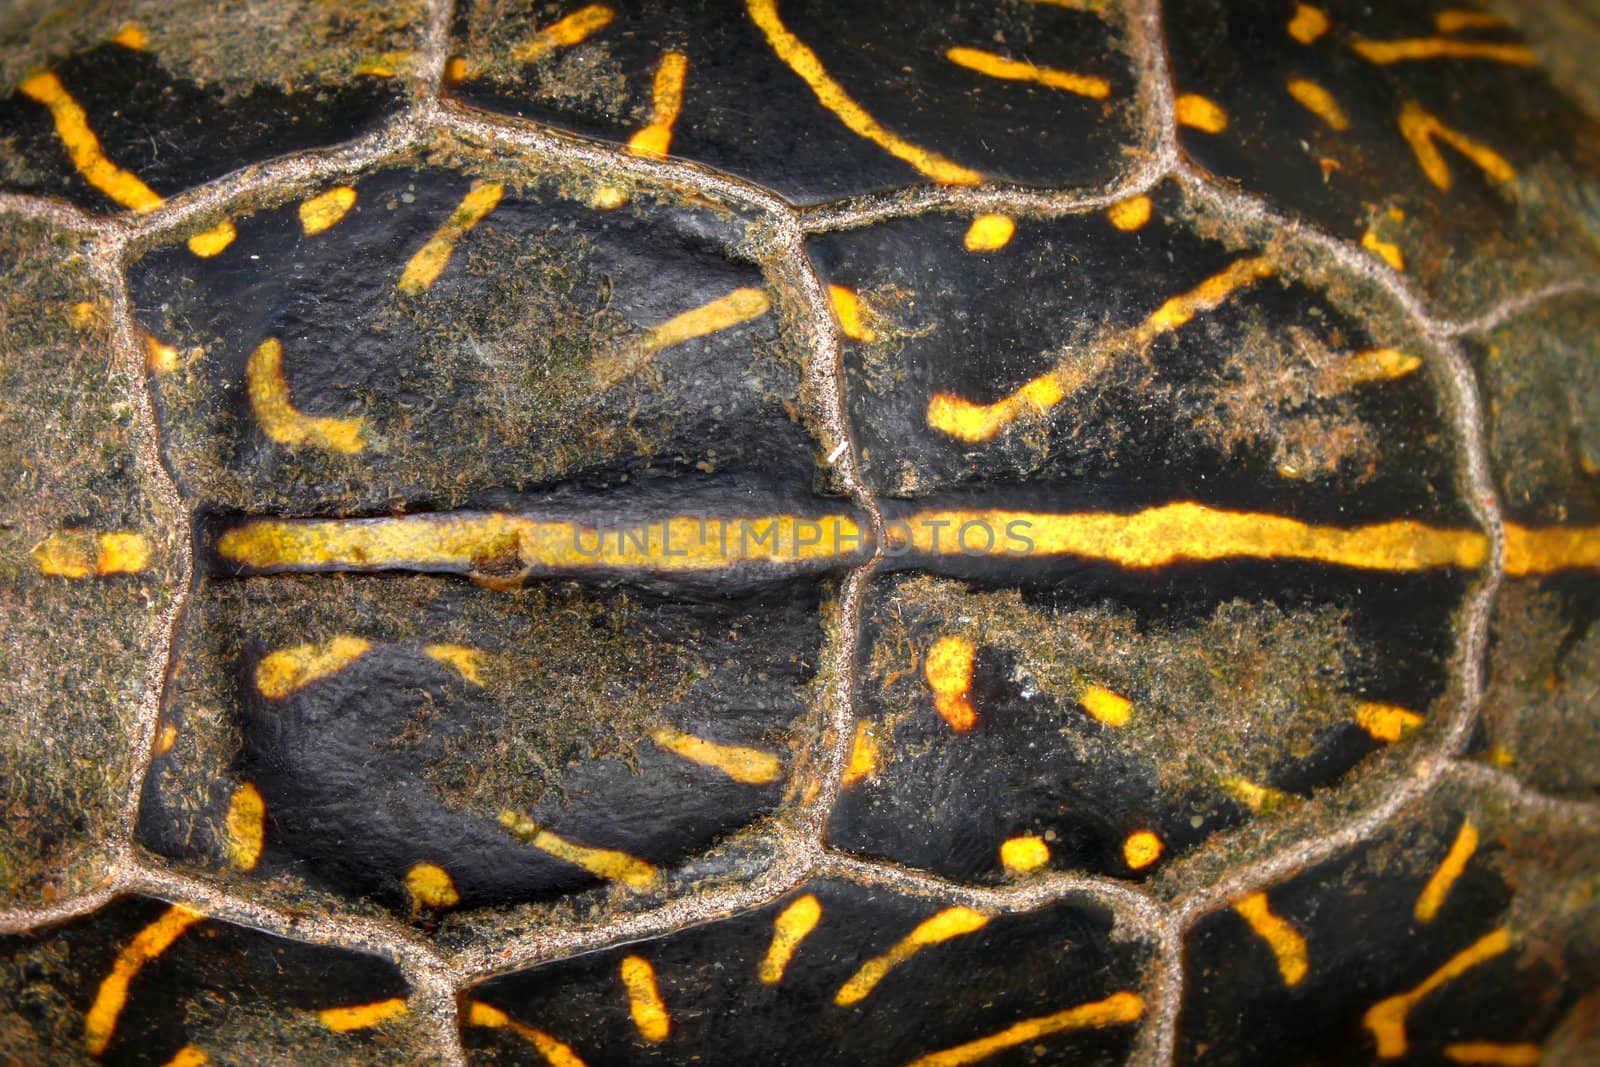 Shell patterns of a Florida box turtle (Terrapene carolina bauri) from Everglades National Park.